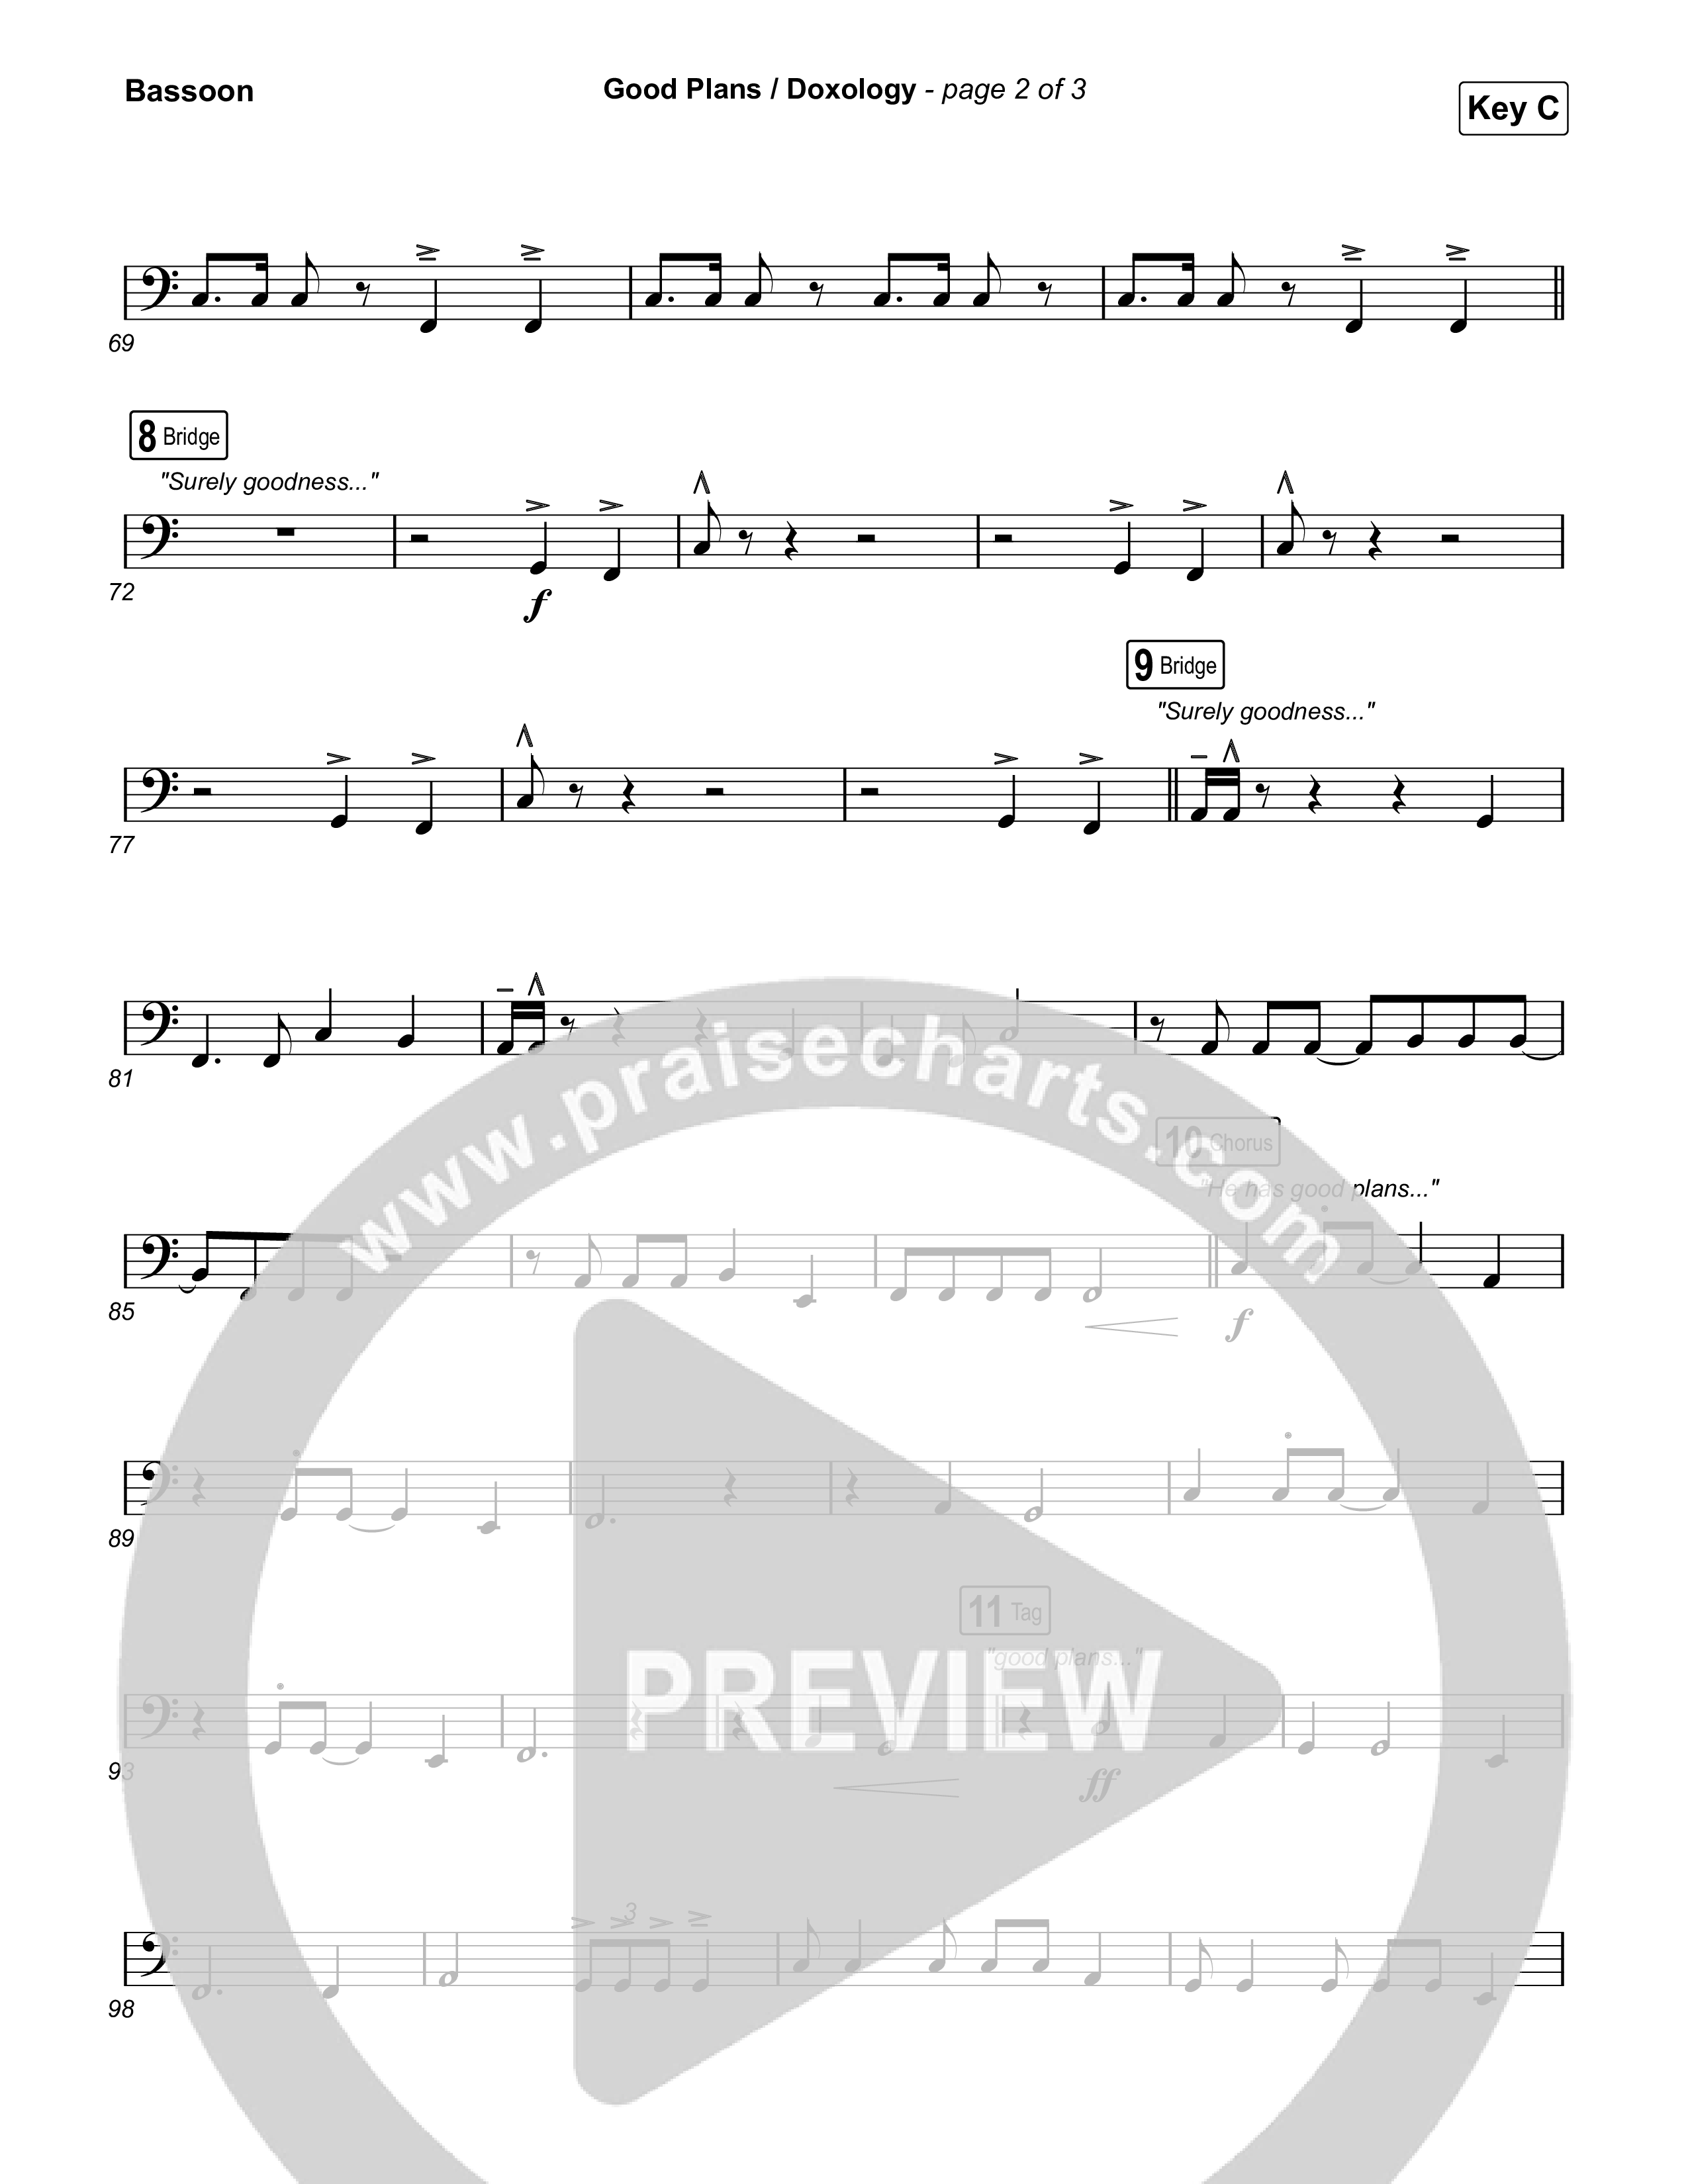 Good Plans/Doxology Bassoon (Red Rocks Worship)